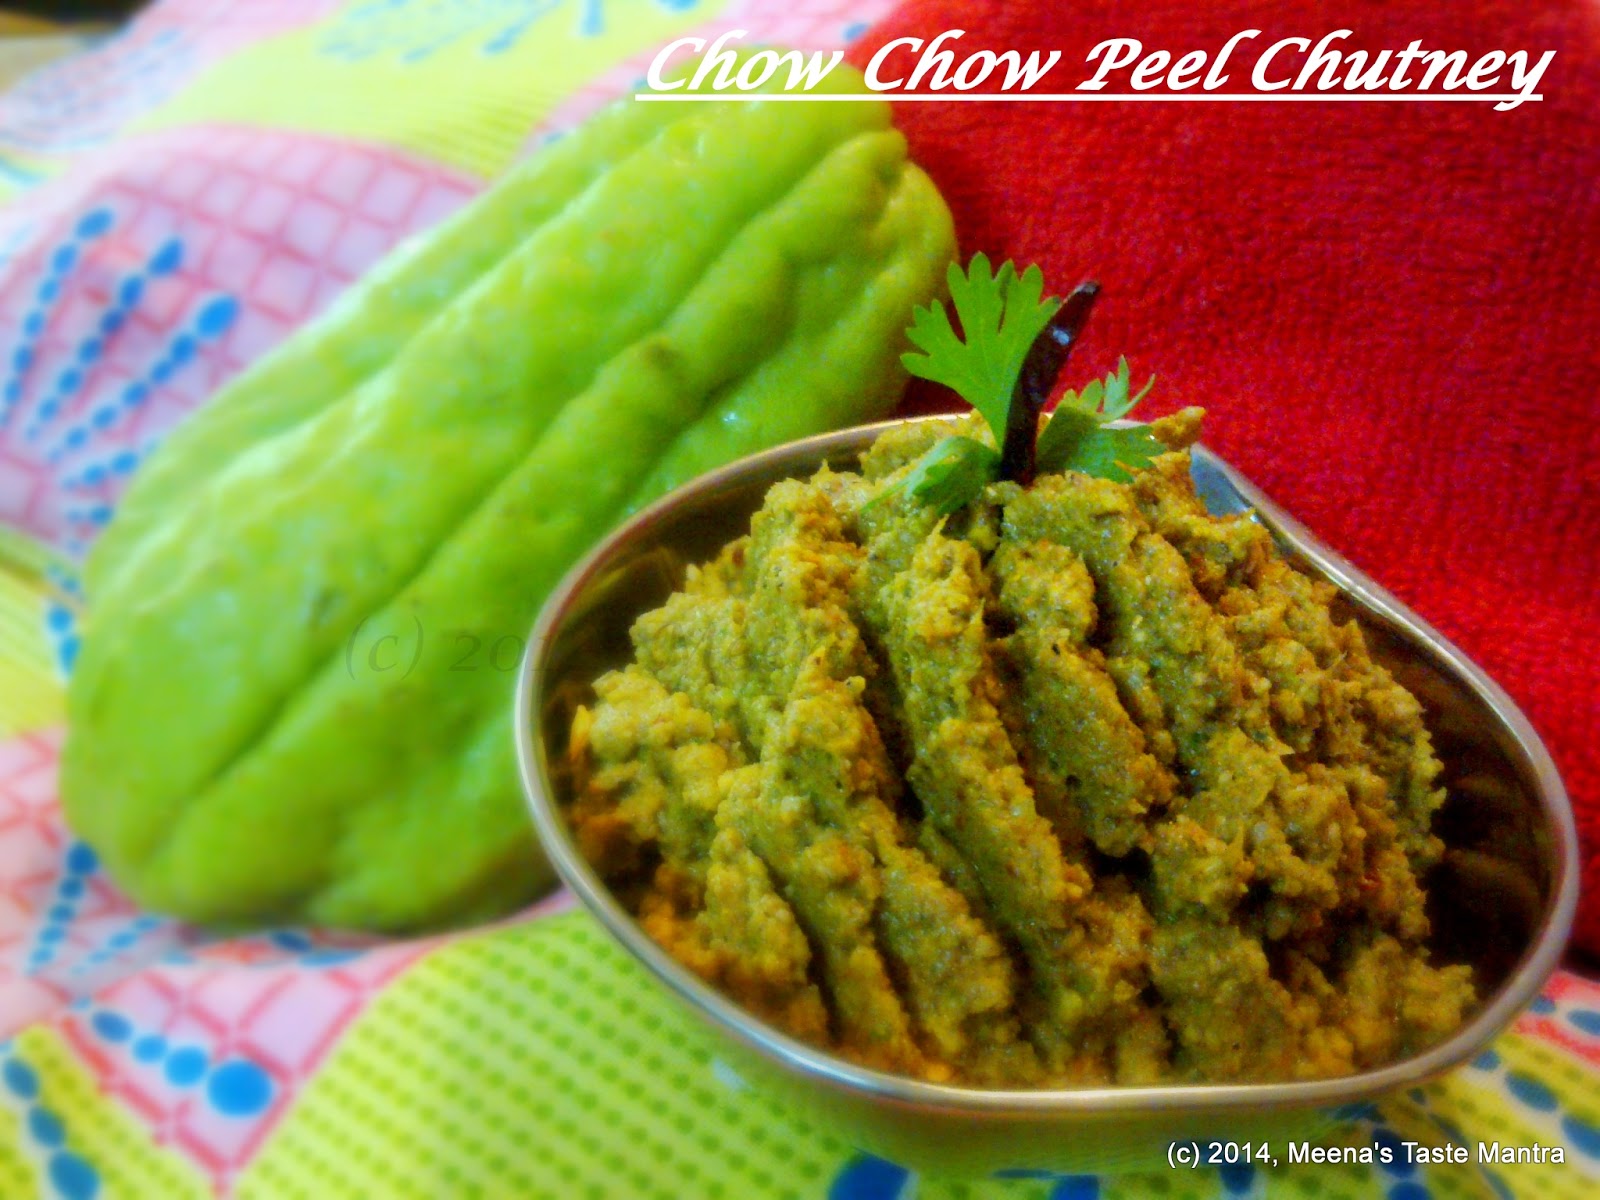 Chow Chow Peel Chutney